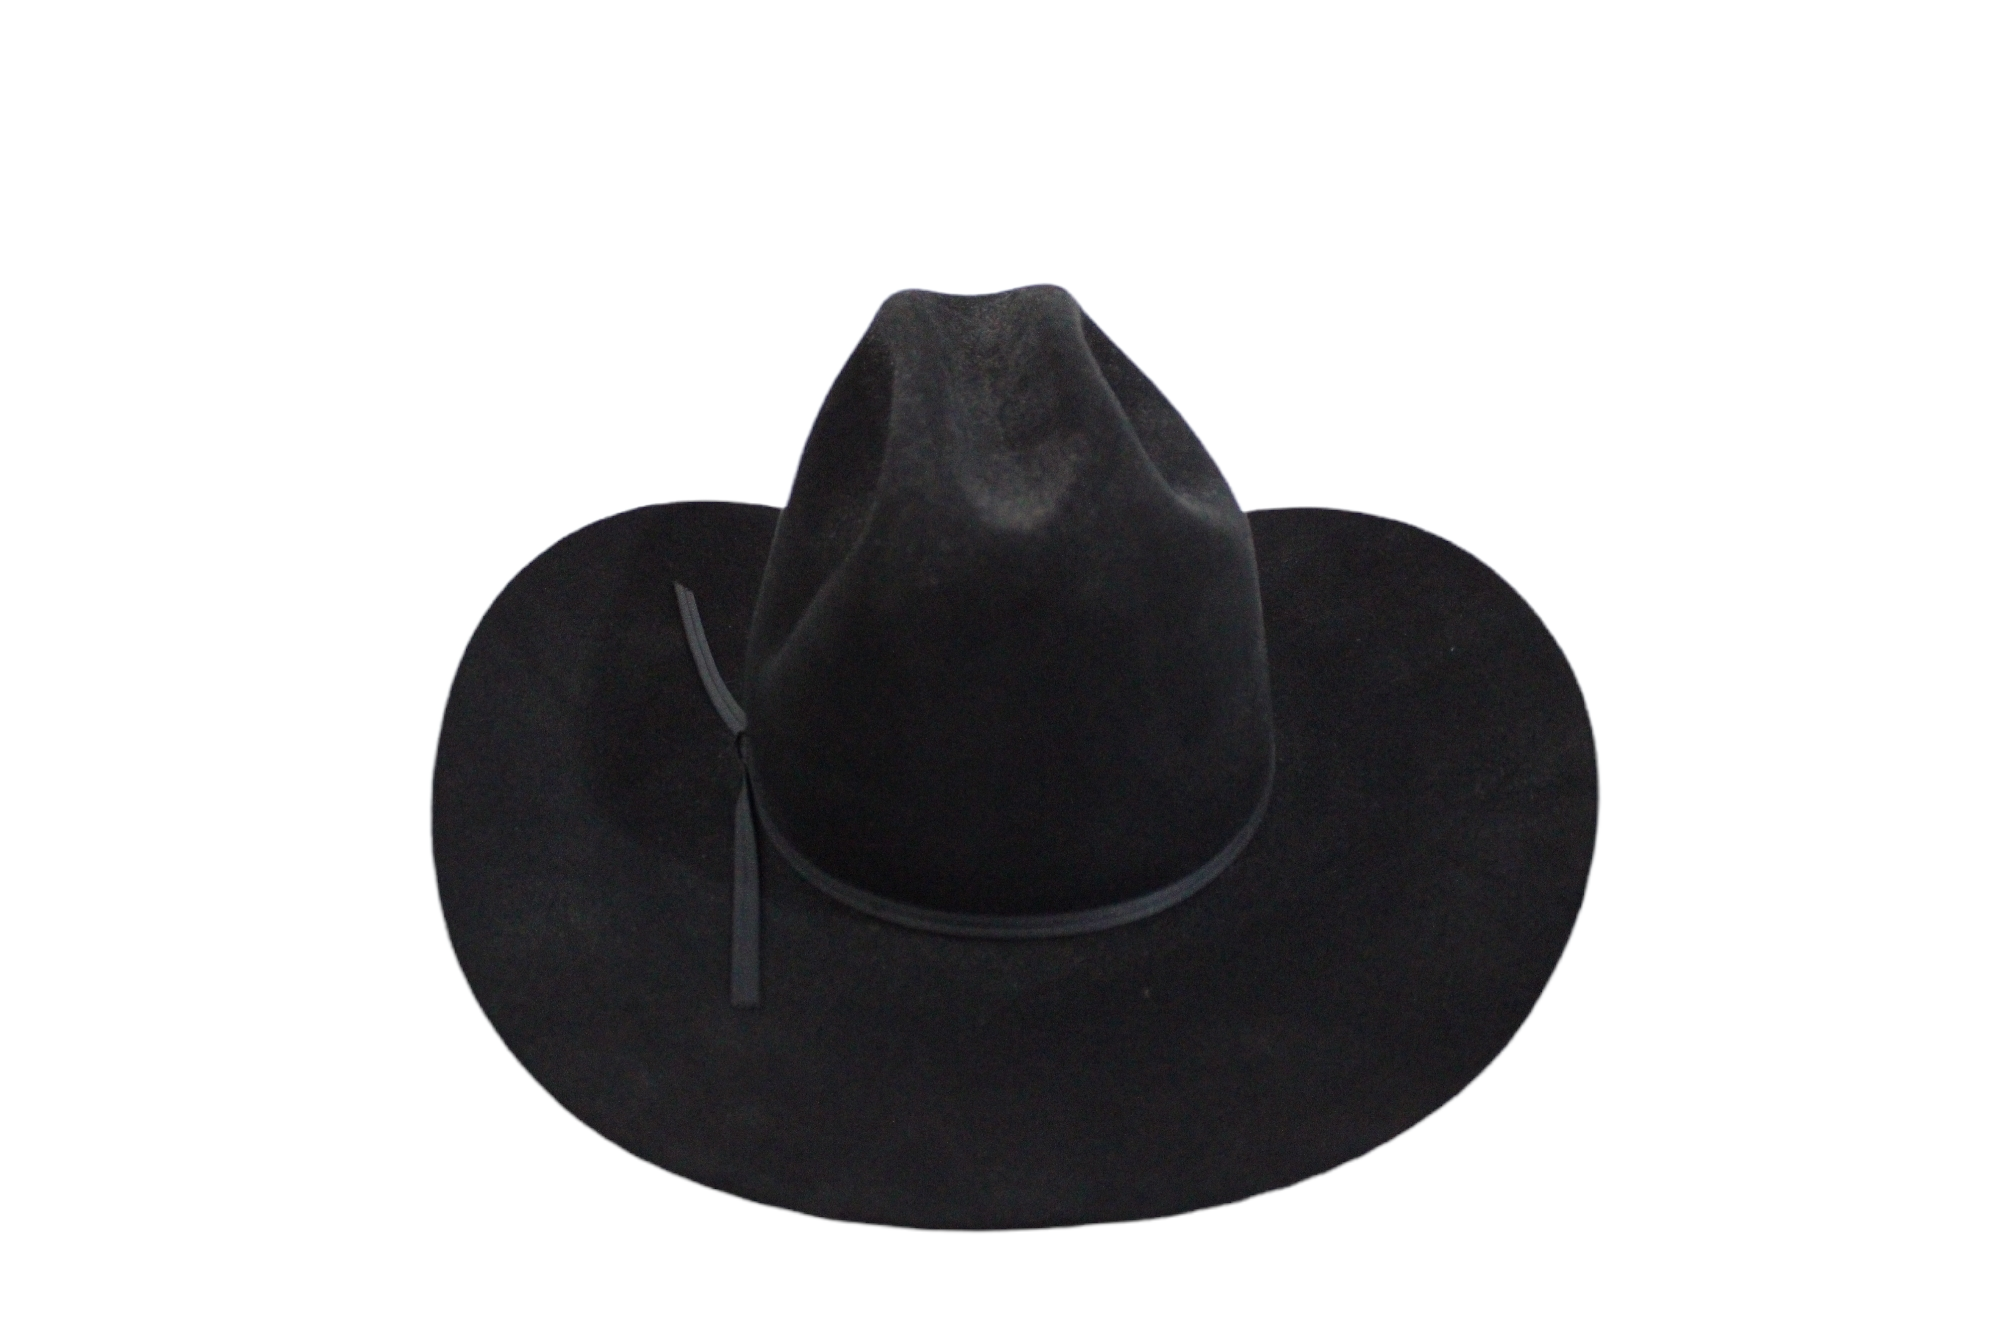 Resistol Cattleman "Self-Conforming" Black Cowboy Hat | Size 7